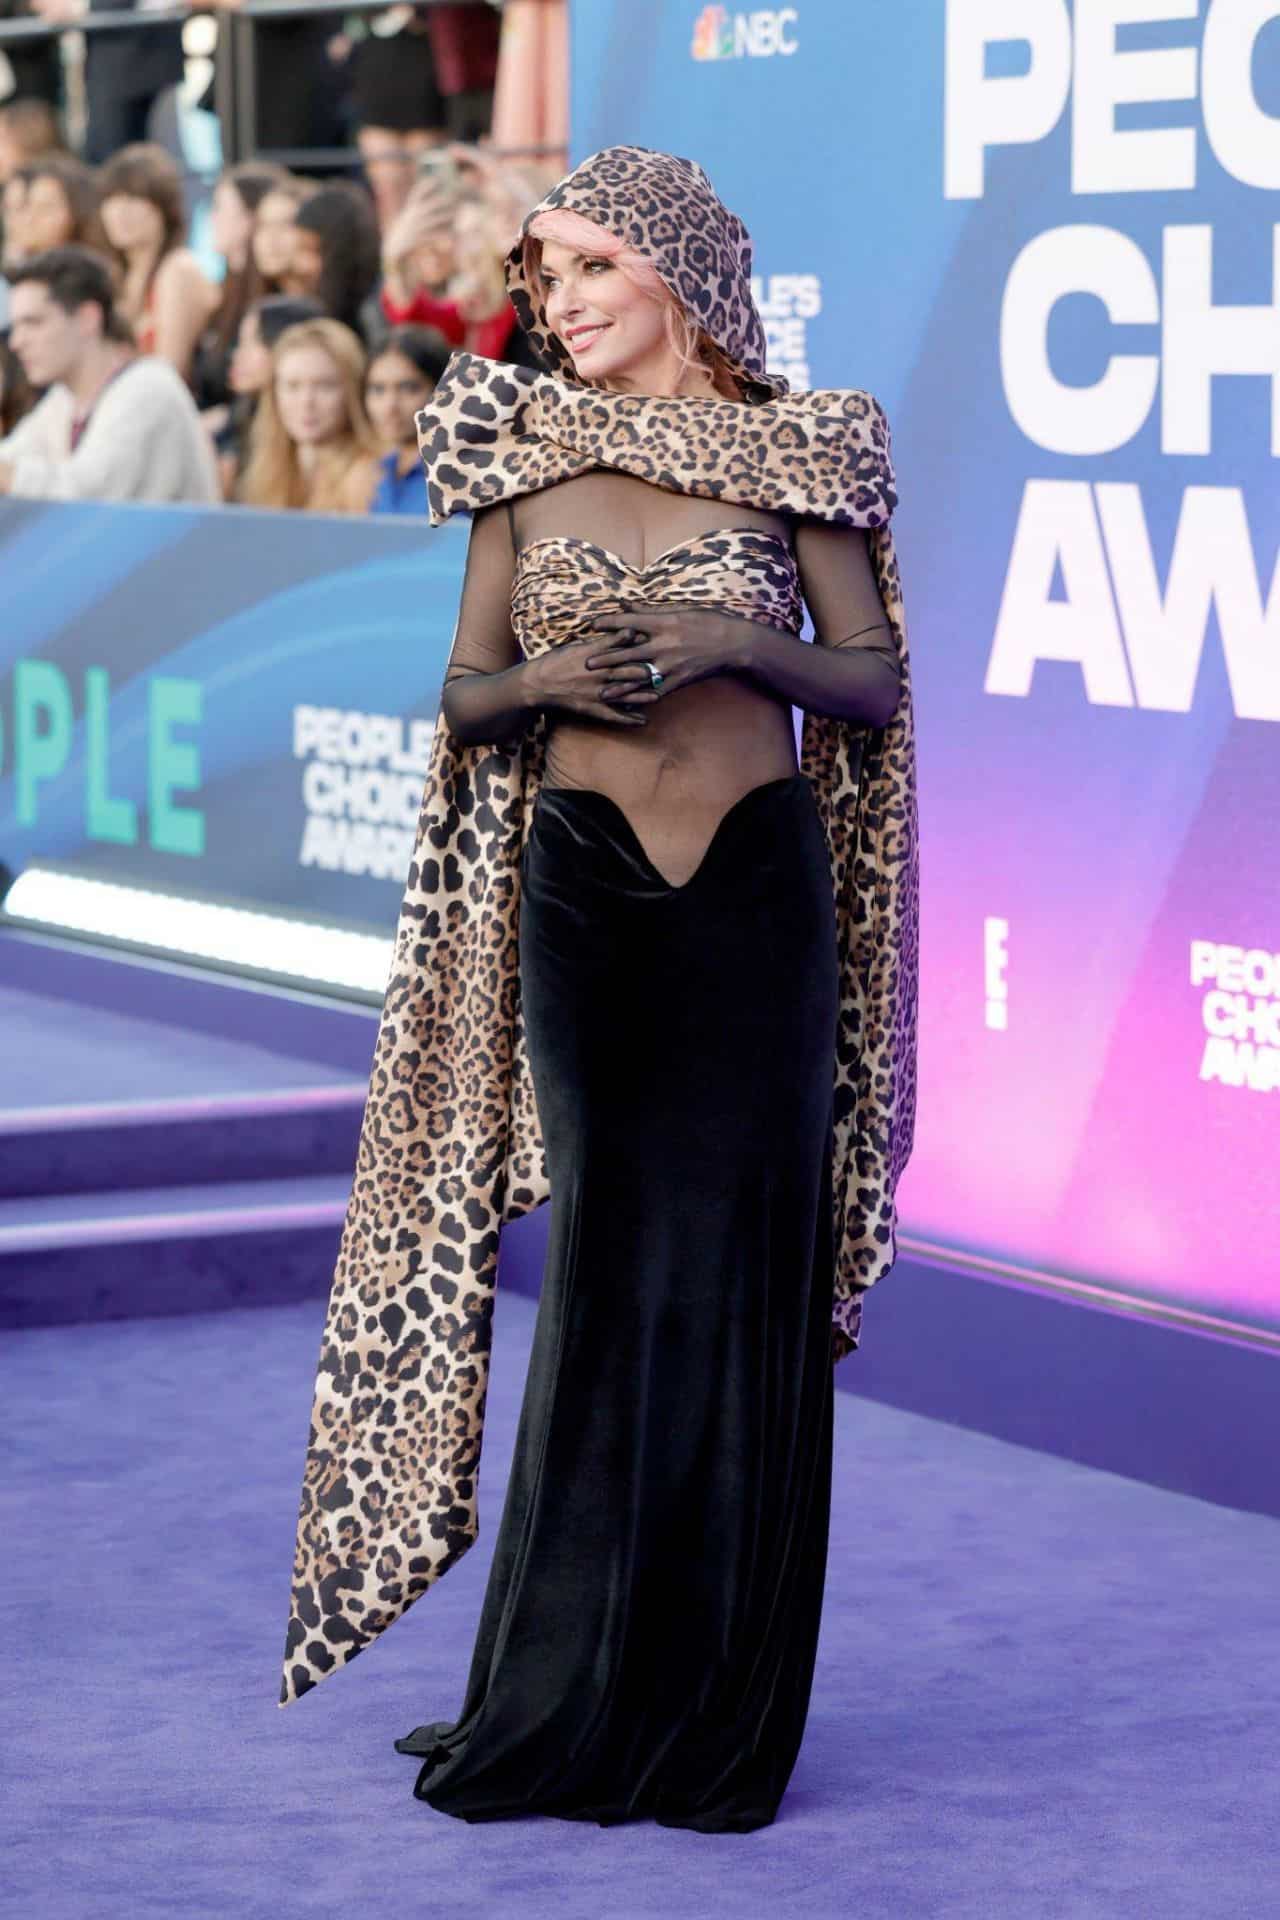 Shania Twain Recreates her 1998 Look at the 2022 People's Choice Awards